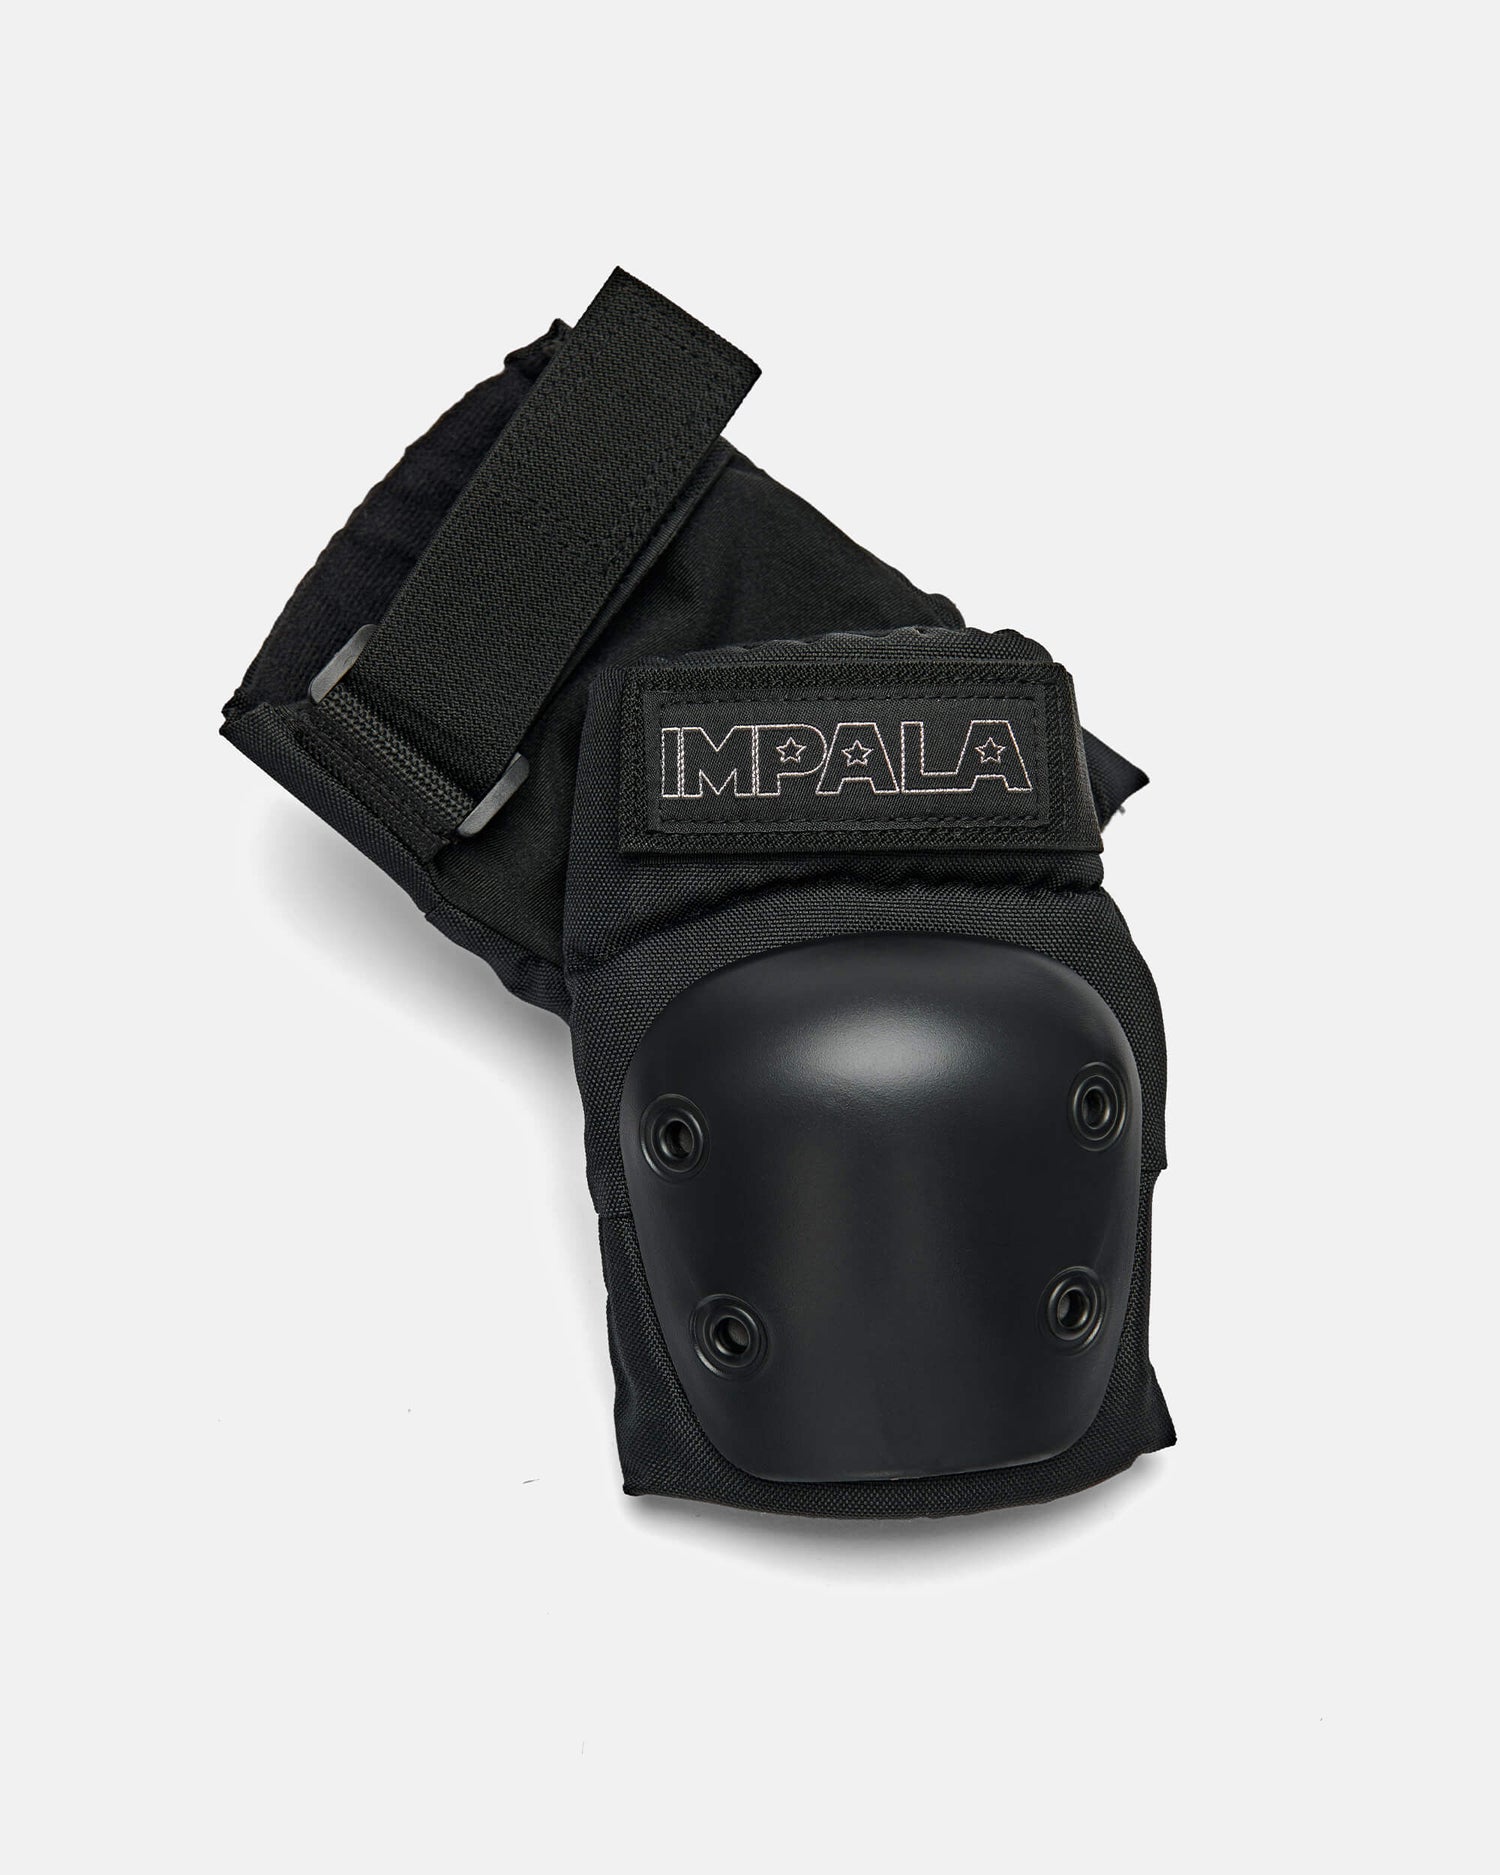 Impala Protective Gear Pack Protector para Adultos - Black in Black